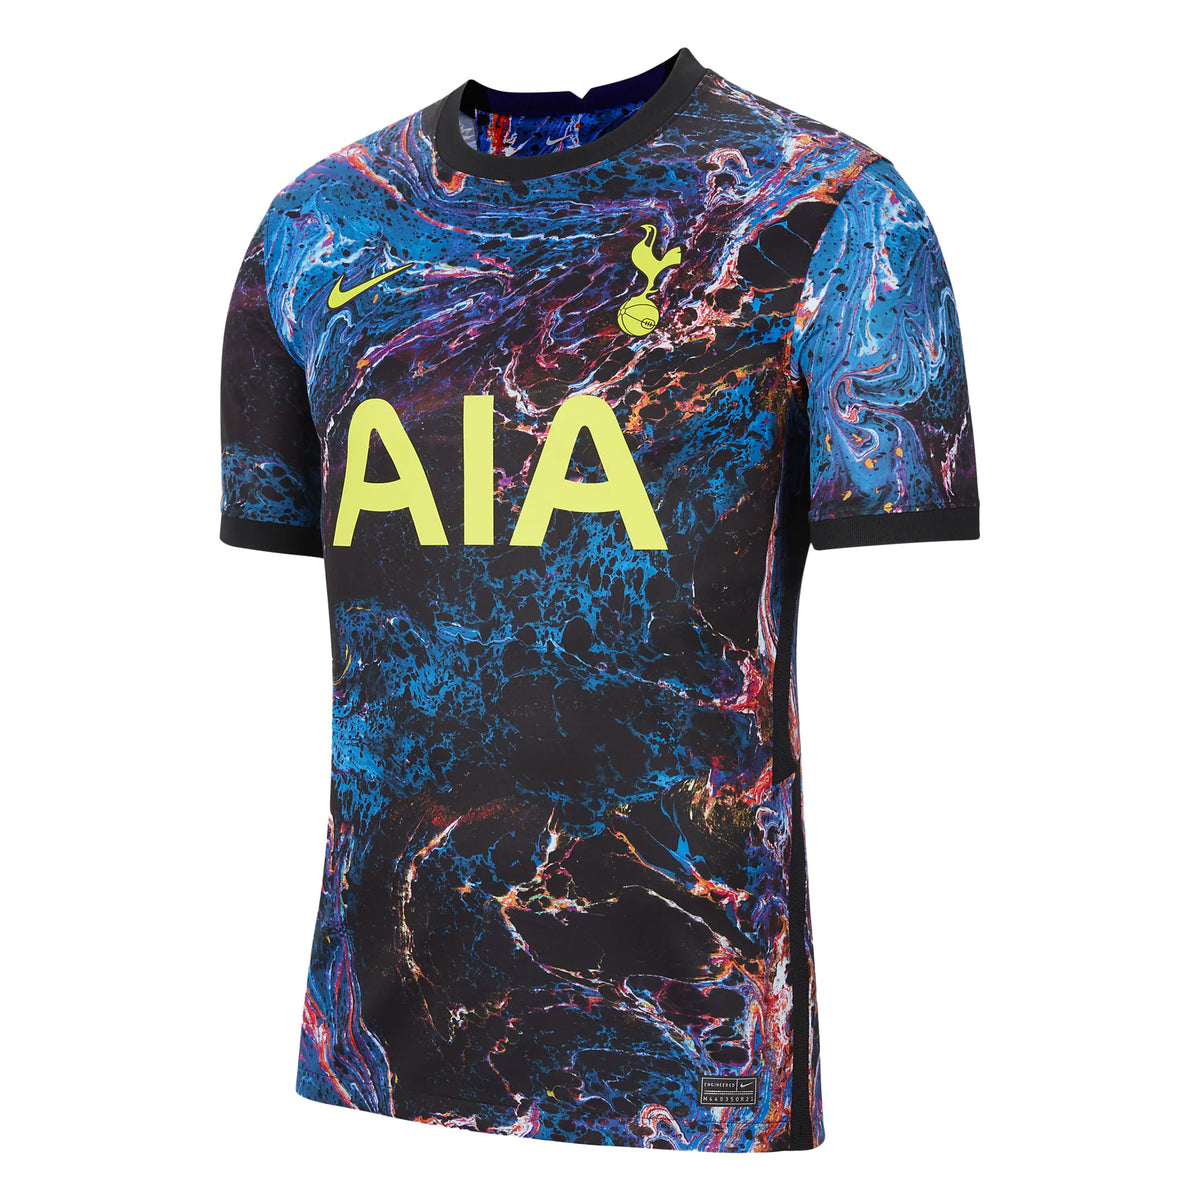 New Tottenham Hotspur Nike 2020/21 kits: Release date confirmed